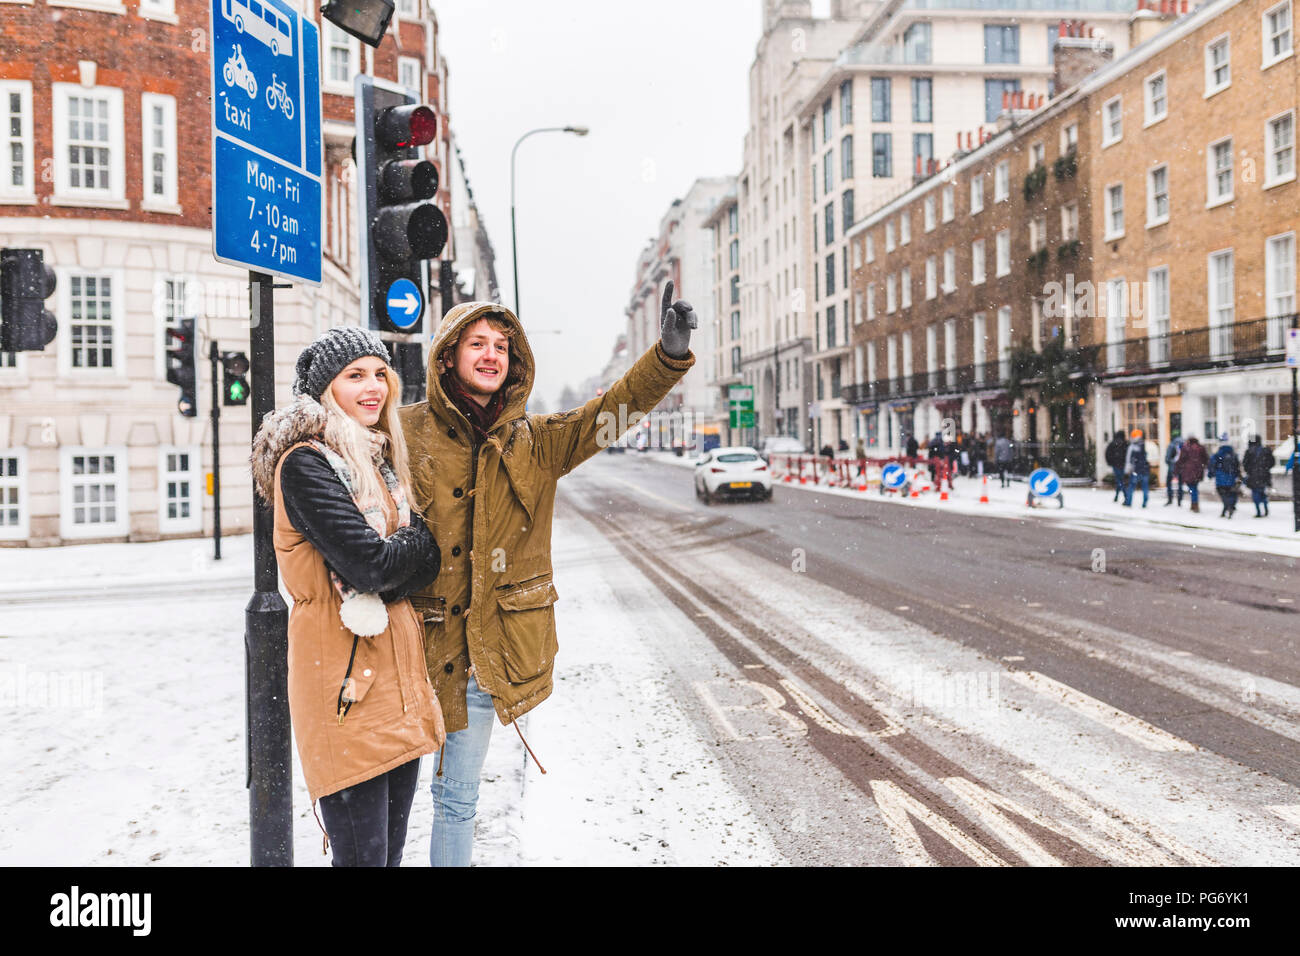 UK, London, junges Paar am Straßenrand hageln Taxi im Winter Stockfoto